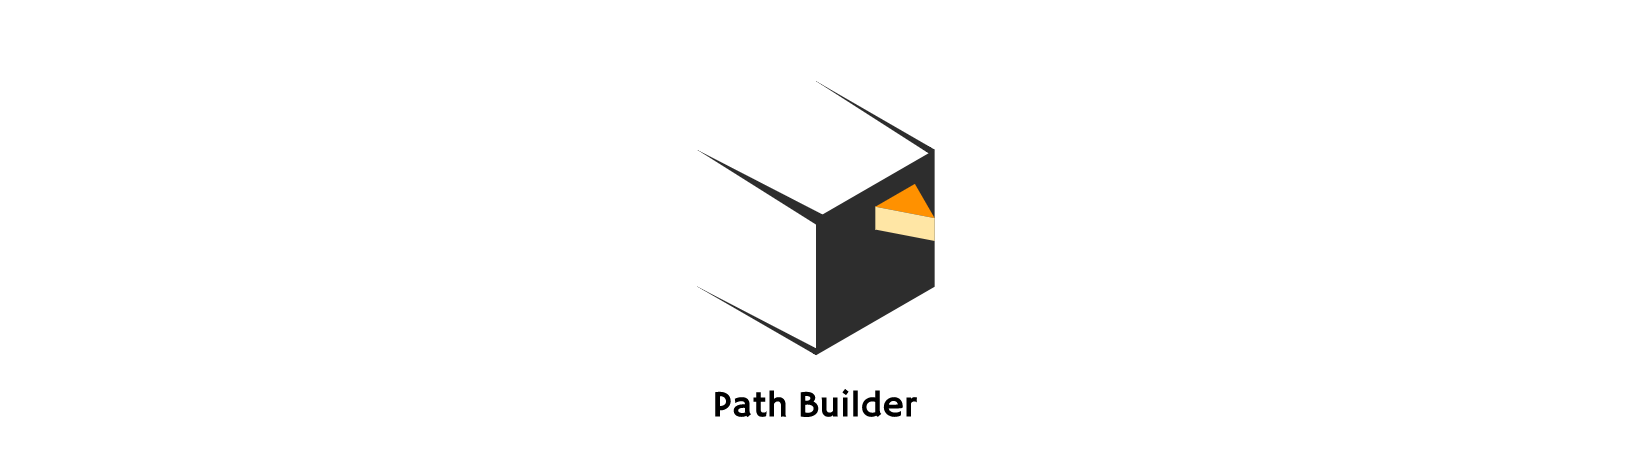 Path builder